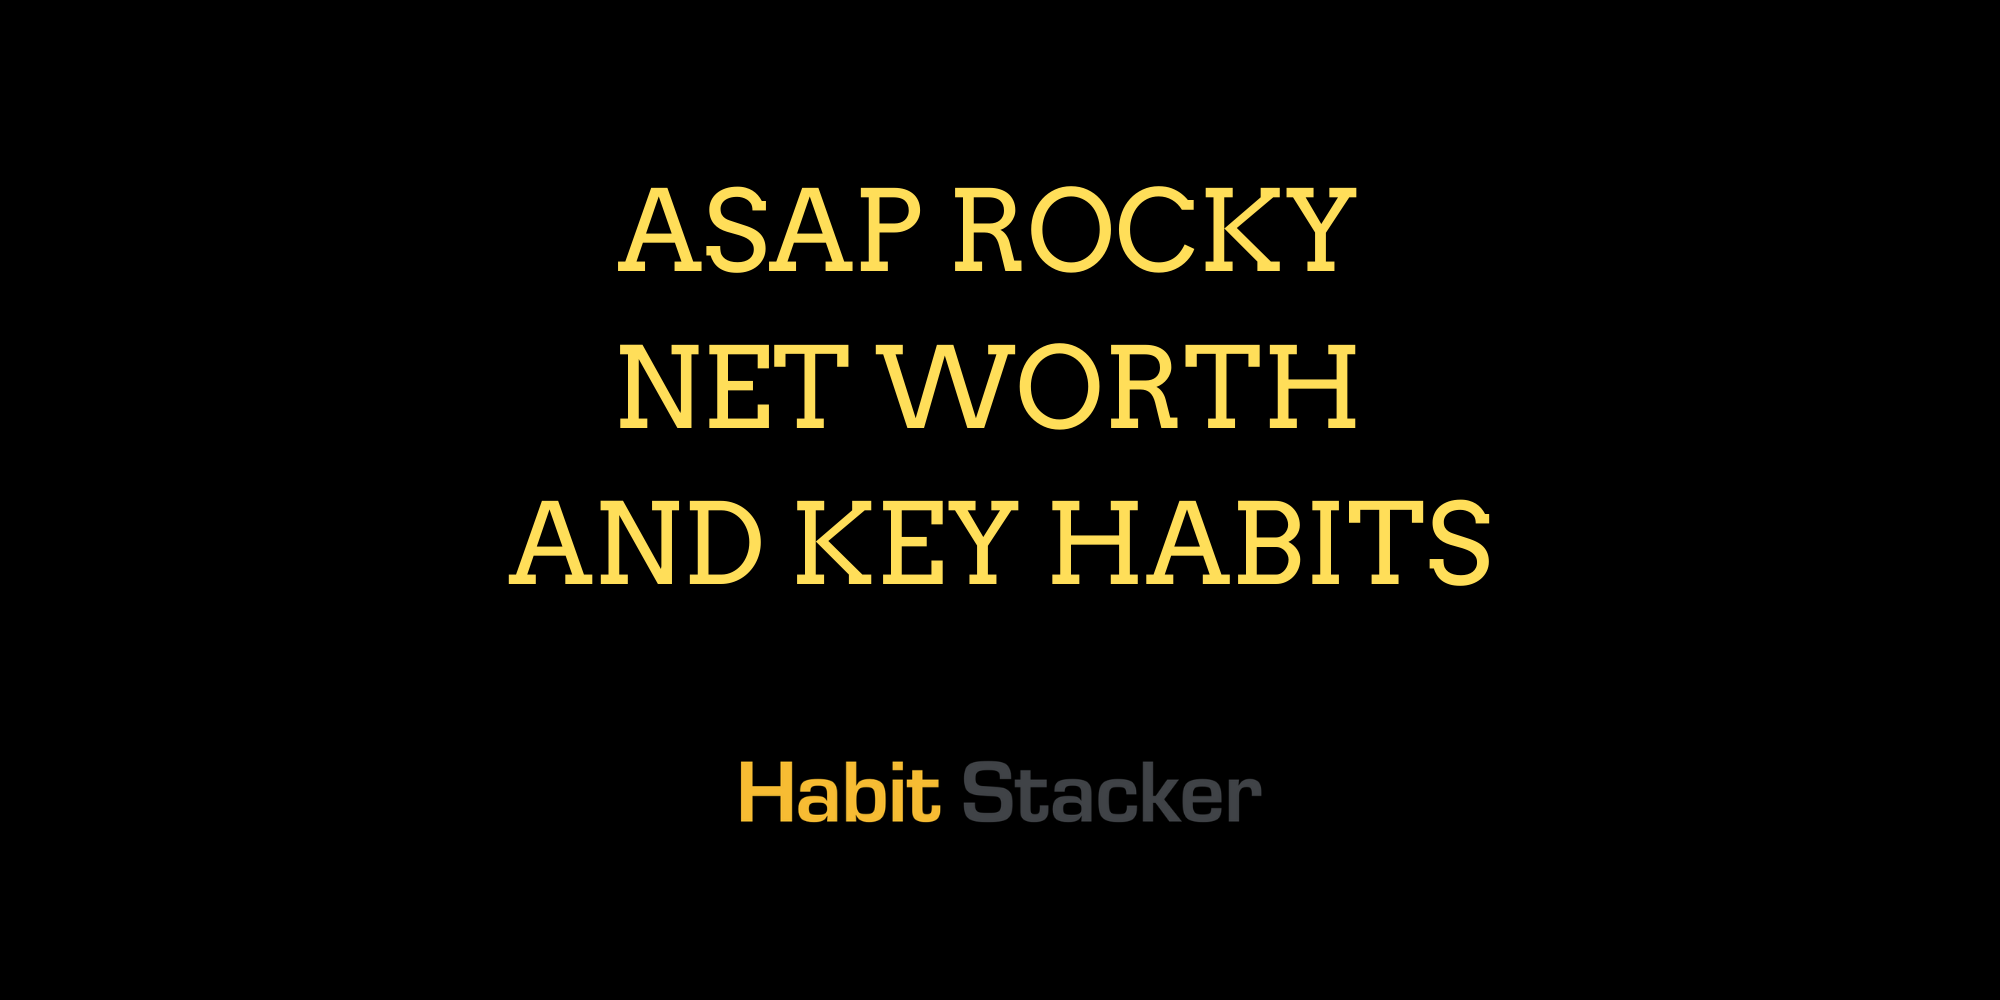 ASAP Rocky Net Worth and Key Habits